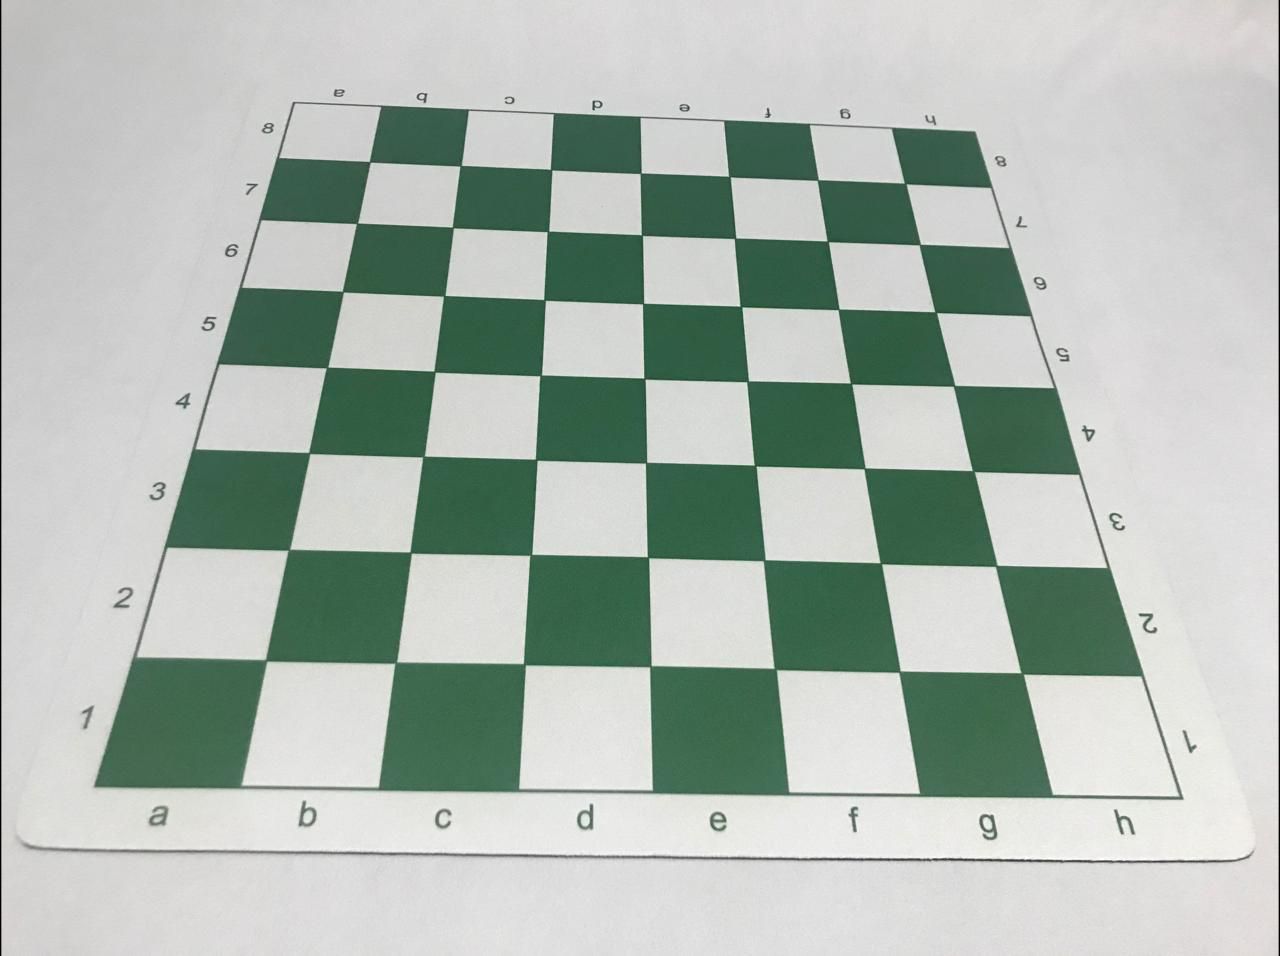 Tabuleiro de Xadrez Mousepad Soft Cor Madeira: Ótima qualidade e  durabilidade - A lojinha de xadrez que virou mania nacional!